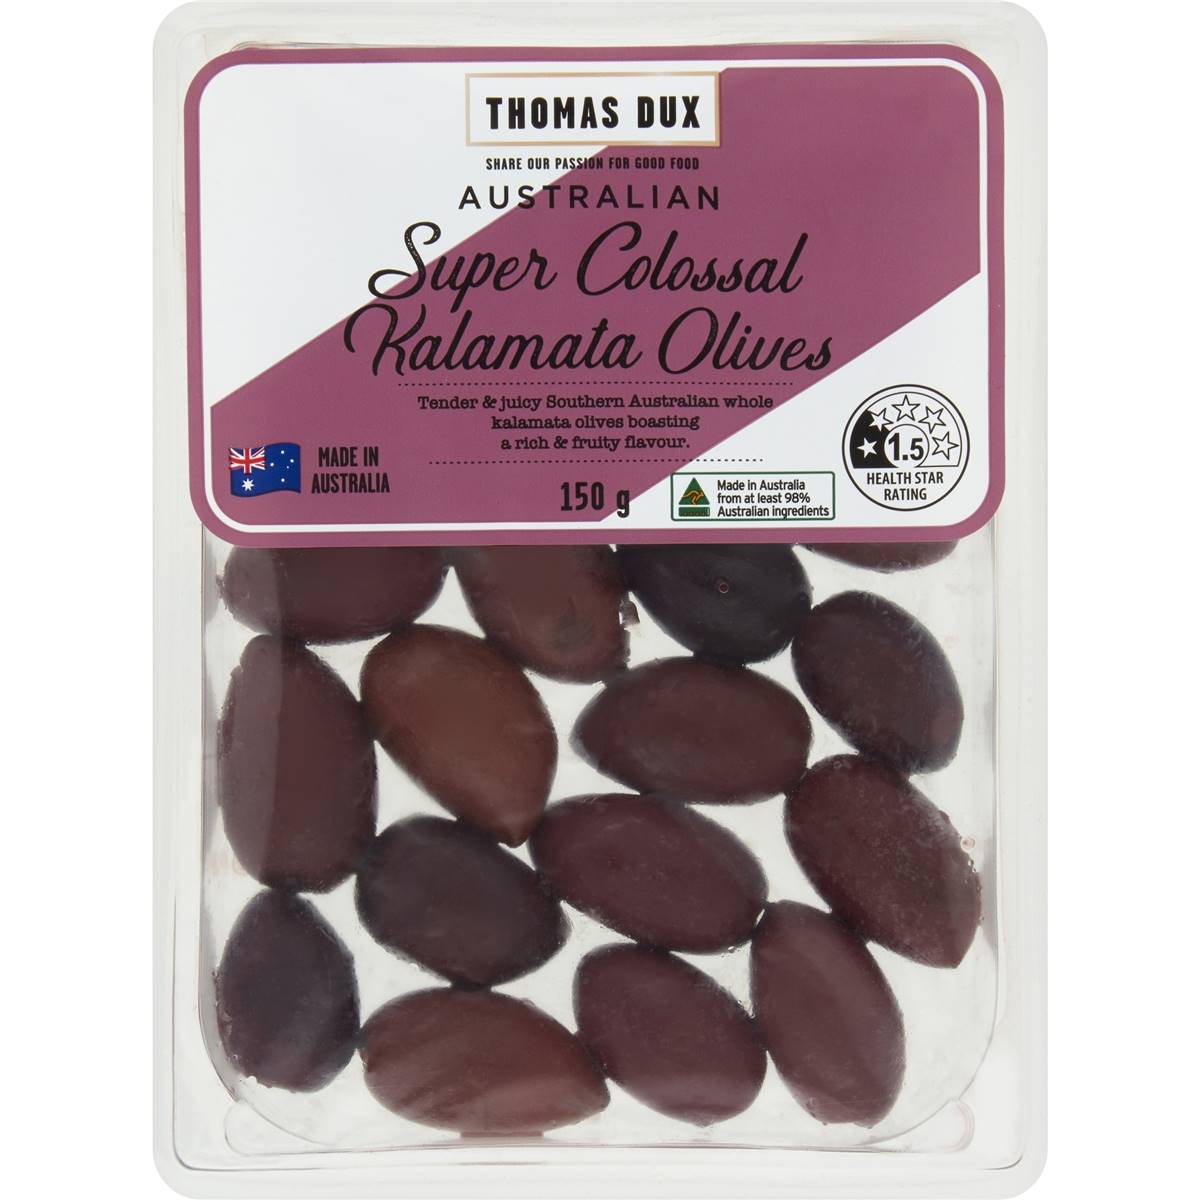 Calories in Thomas Dux Australian Super Colossal Kalamata Olives